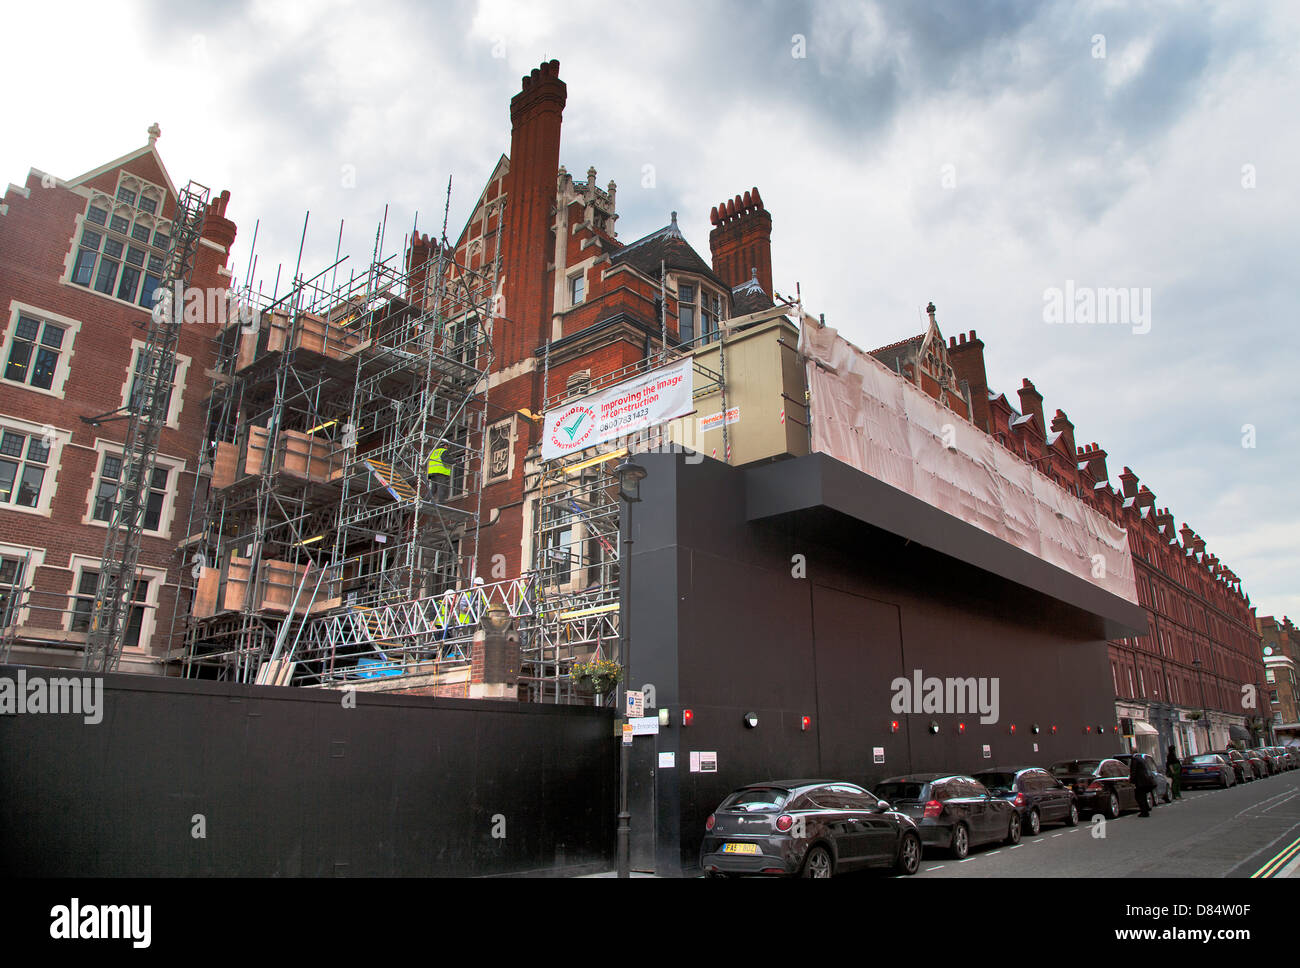 Développement de l'ancienne caserne de Chiltern Street, Marylebone Londres W1 Angleterre Angleterre Europe Banque D'Images